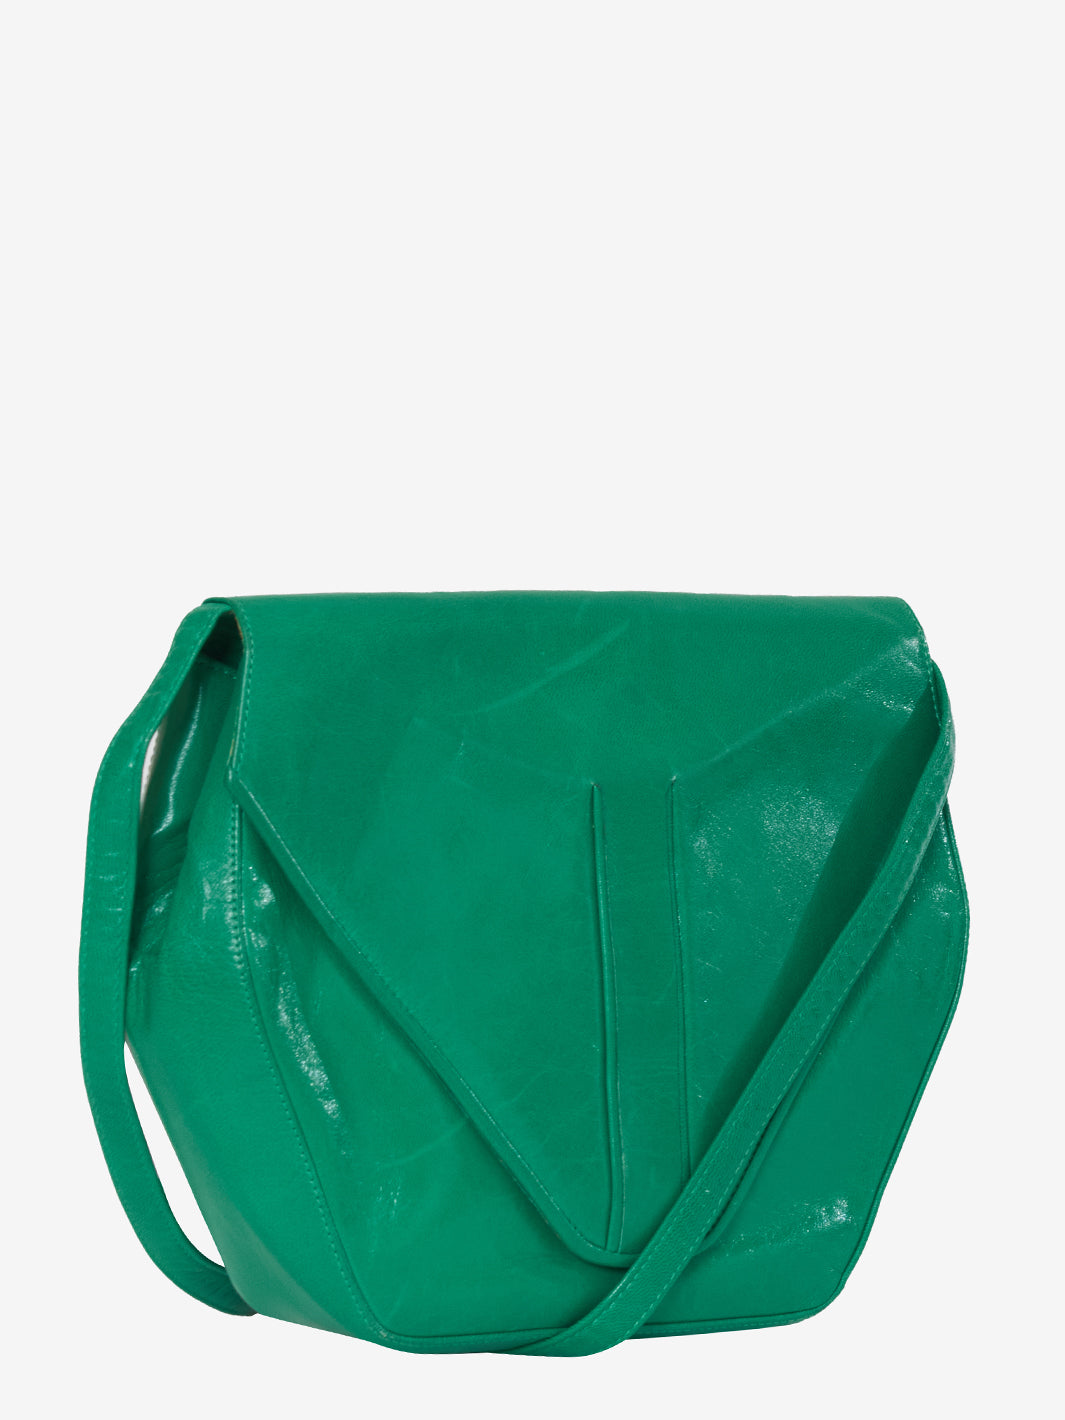 Green shoulder strap with hexagonal shape